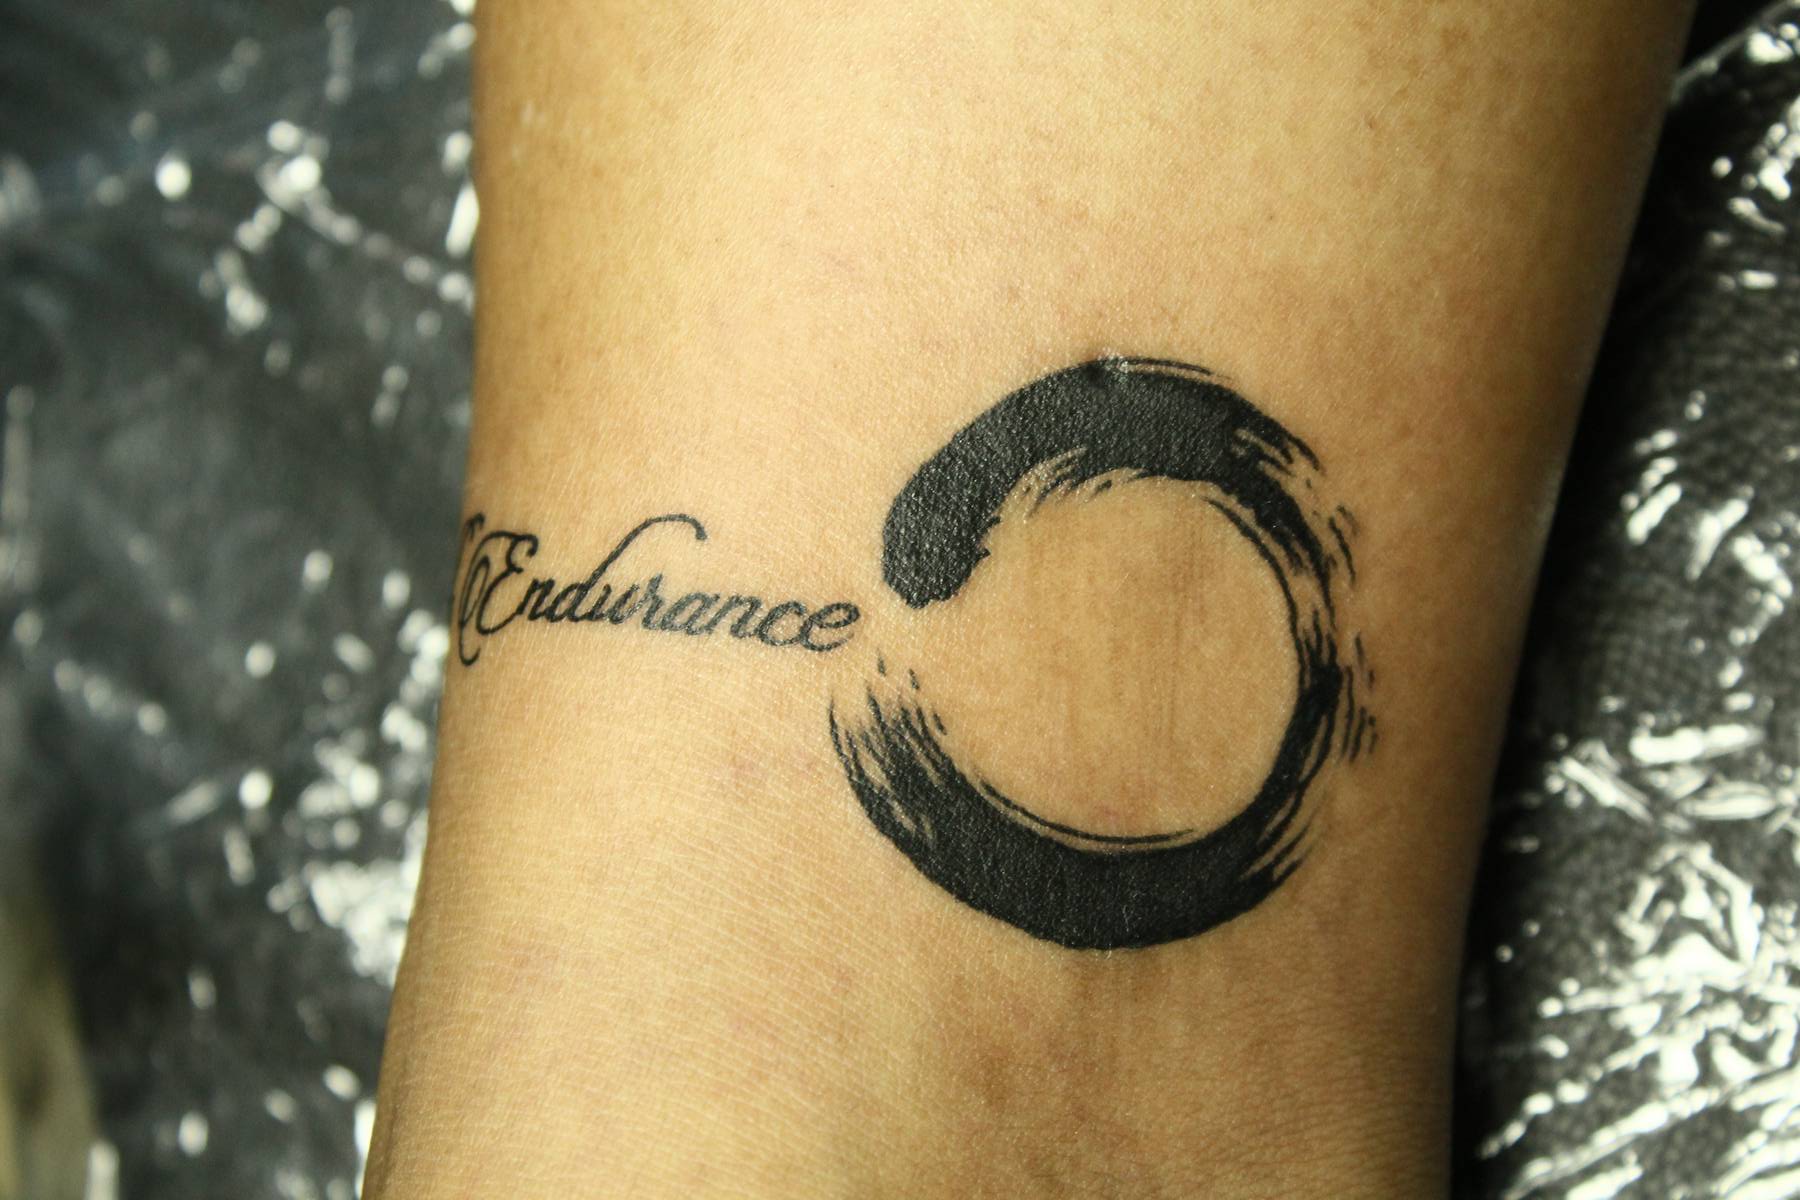 Endurance - Black Ink Zen Circle Tattoo Design For Wrist